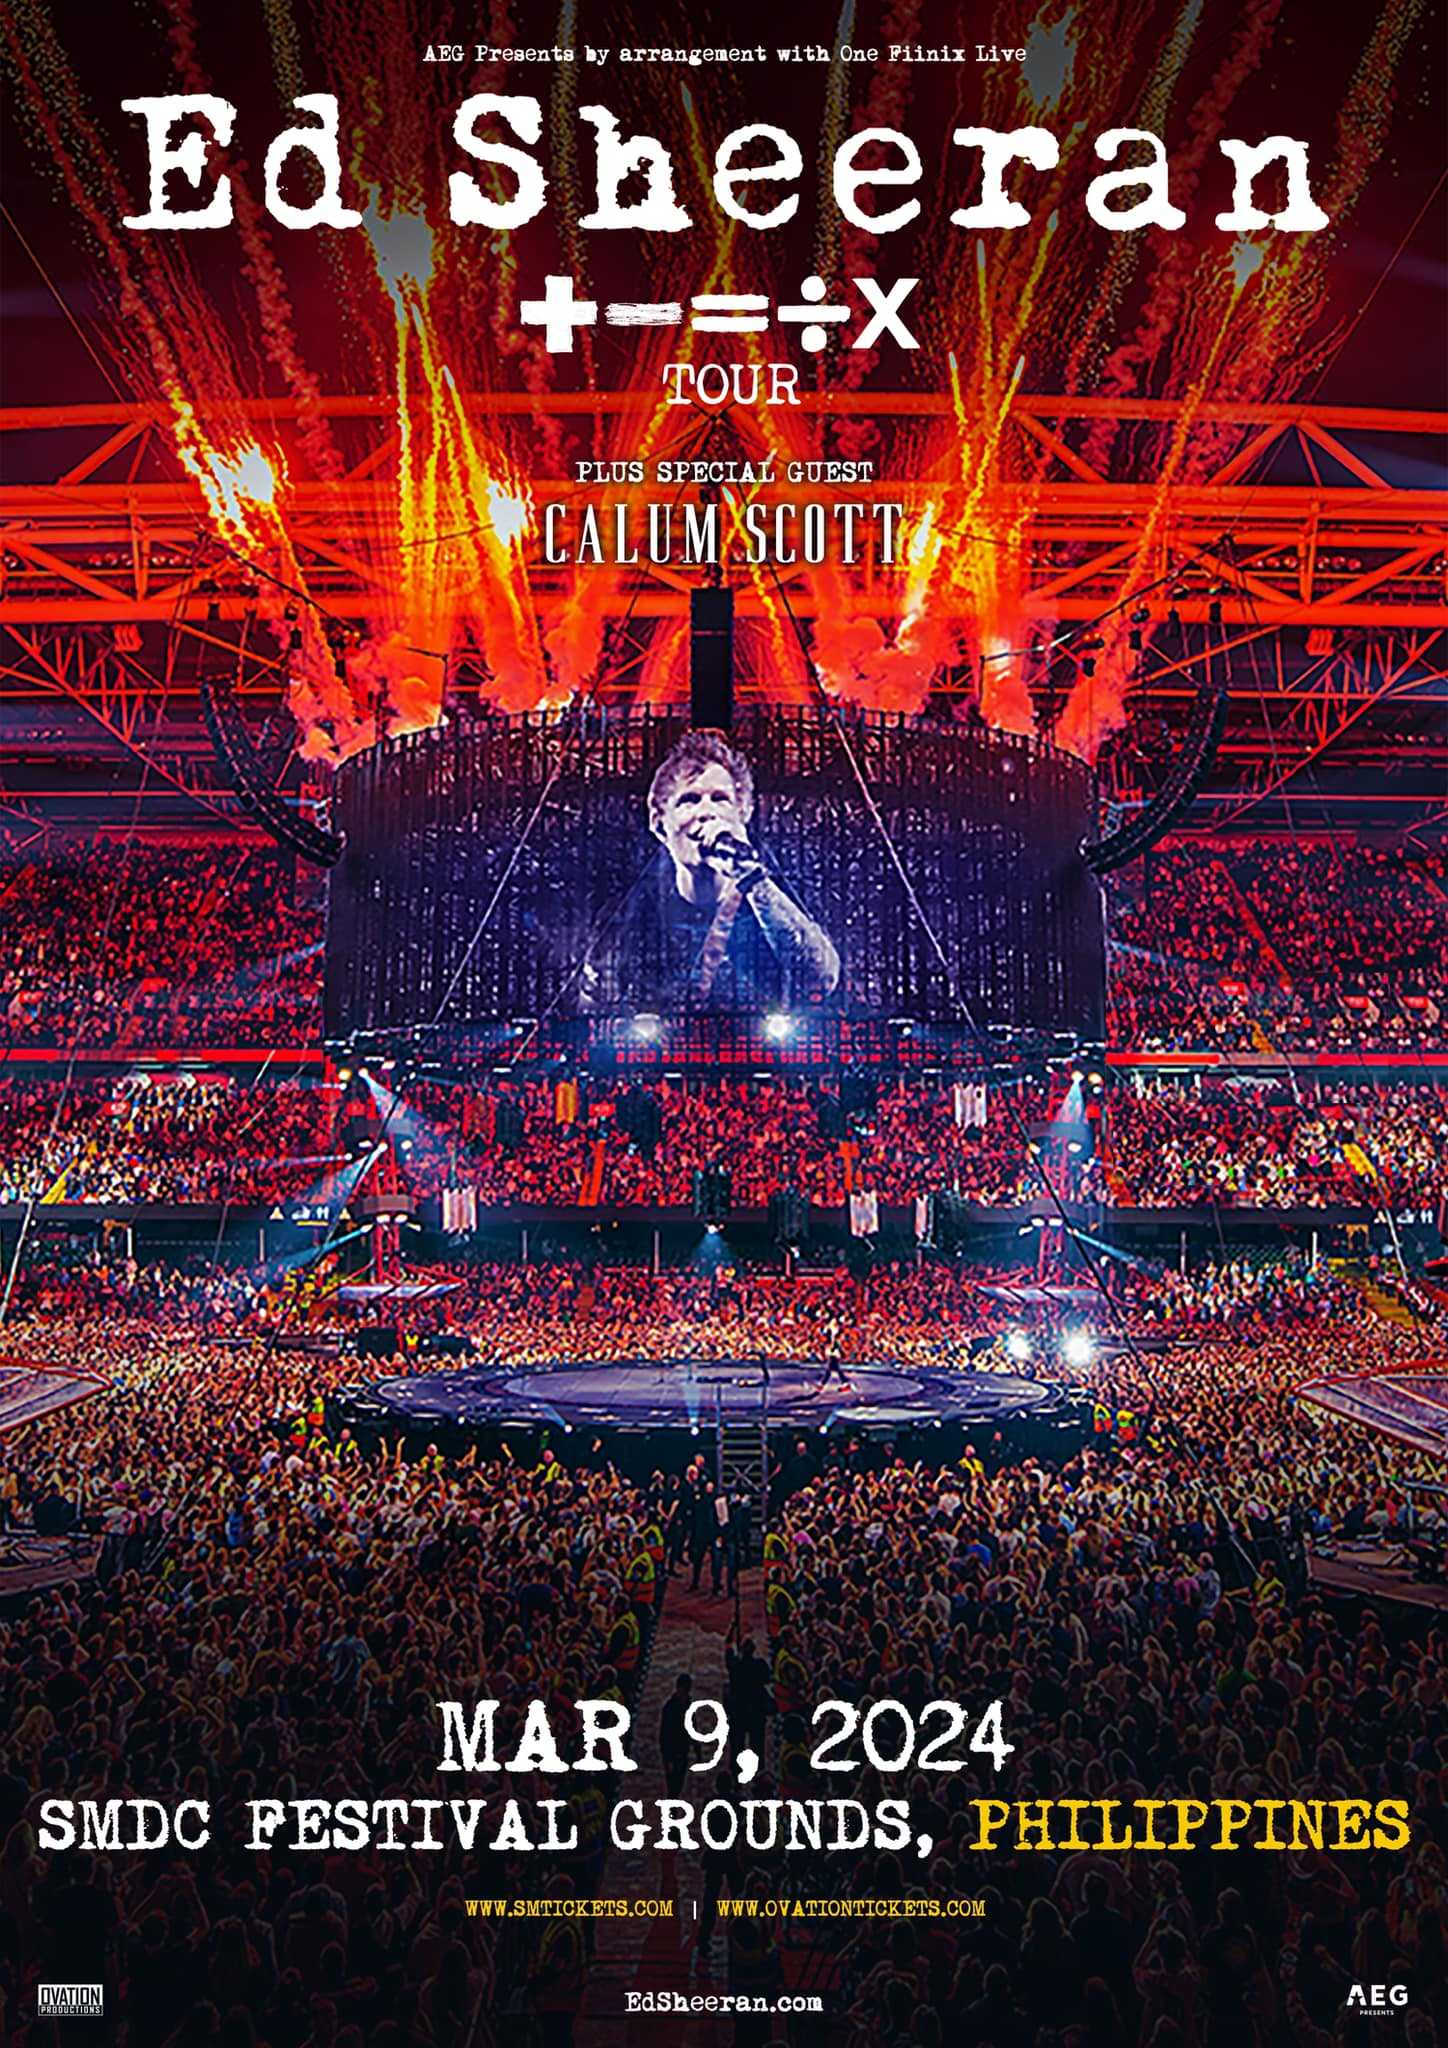 Ed Sheeran returns to Manila in 2024 with ‘+ - = ÷ x Tour’